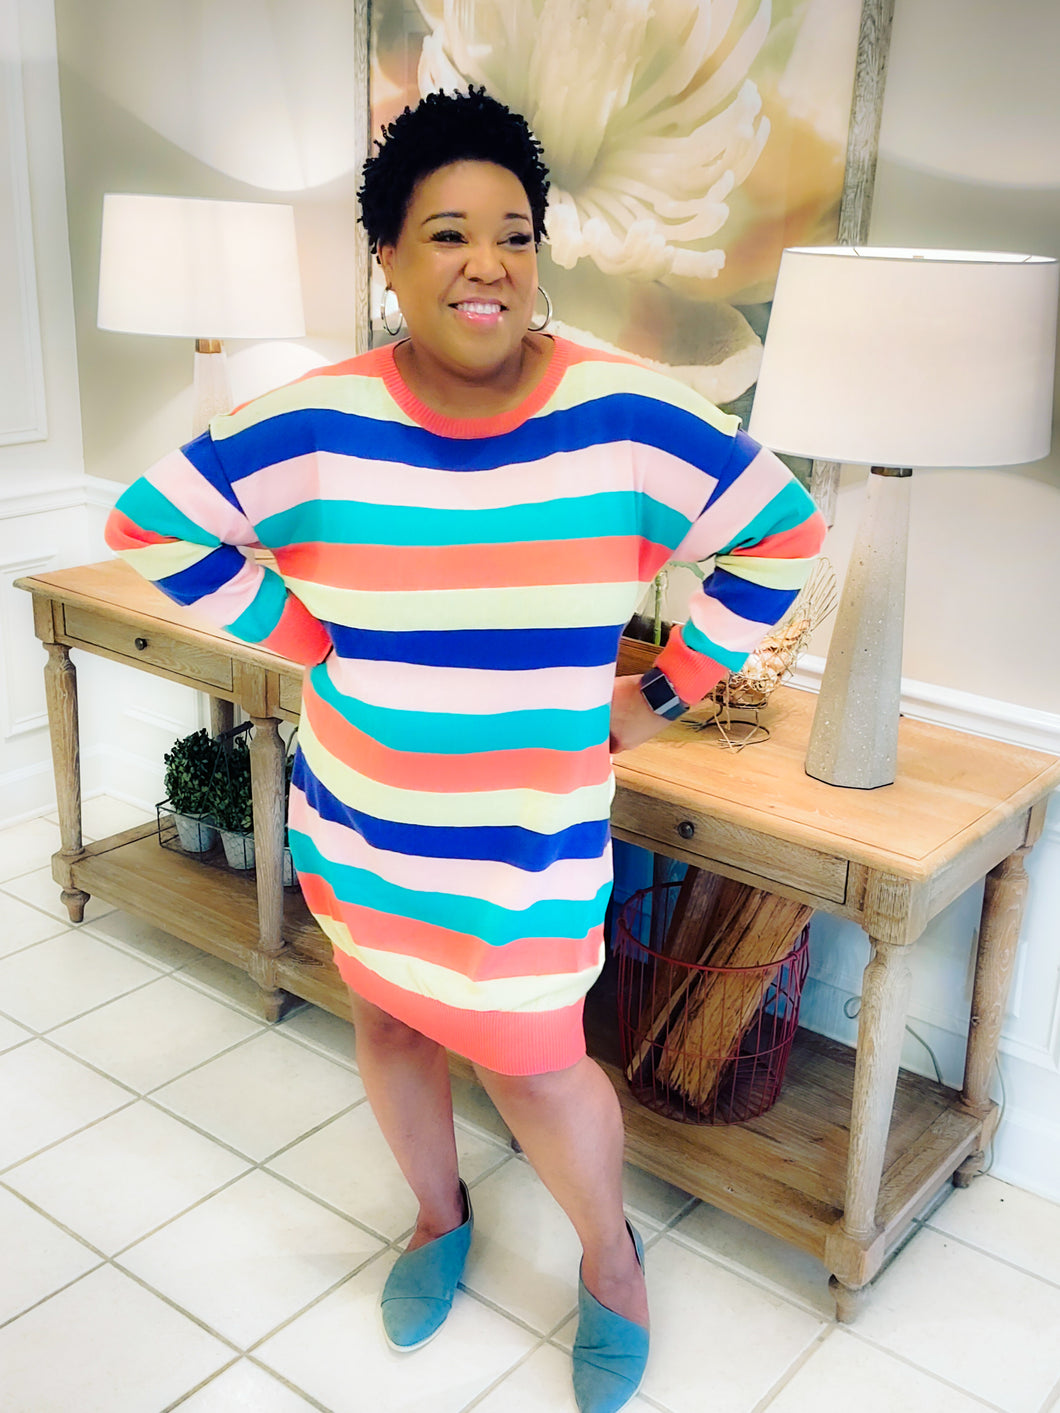 Multi colored Sweater Dress